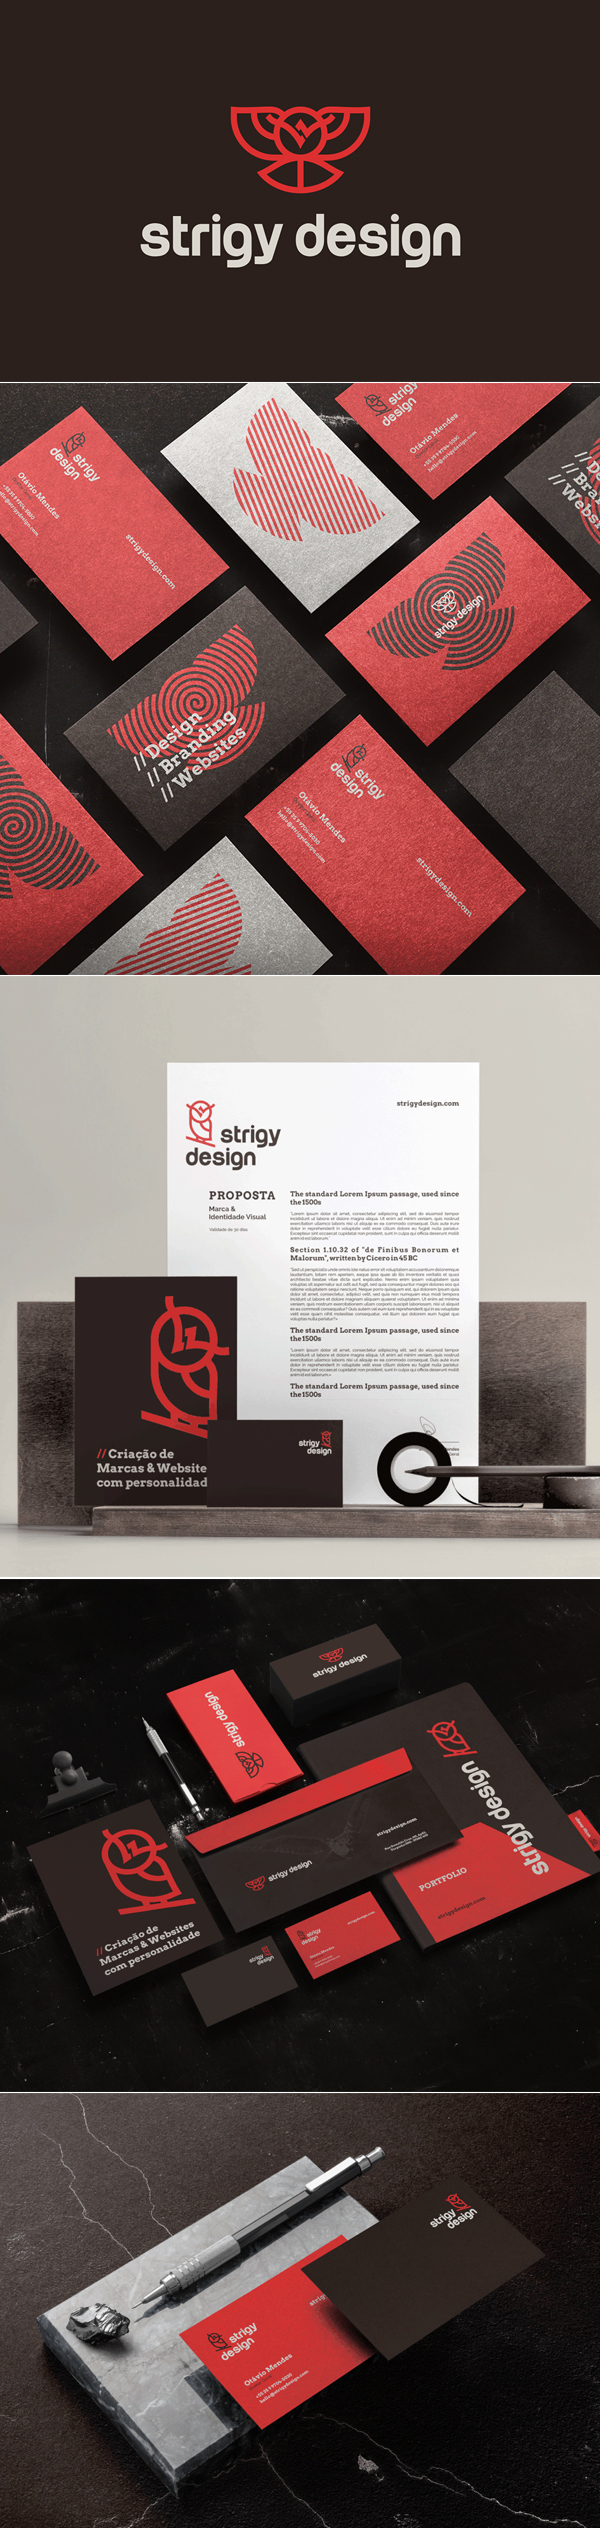 Business Card - Strigy Design Branding Identity by Strigy Design